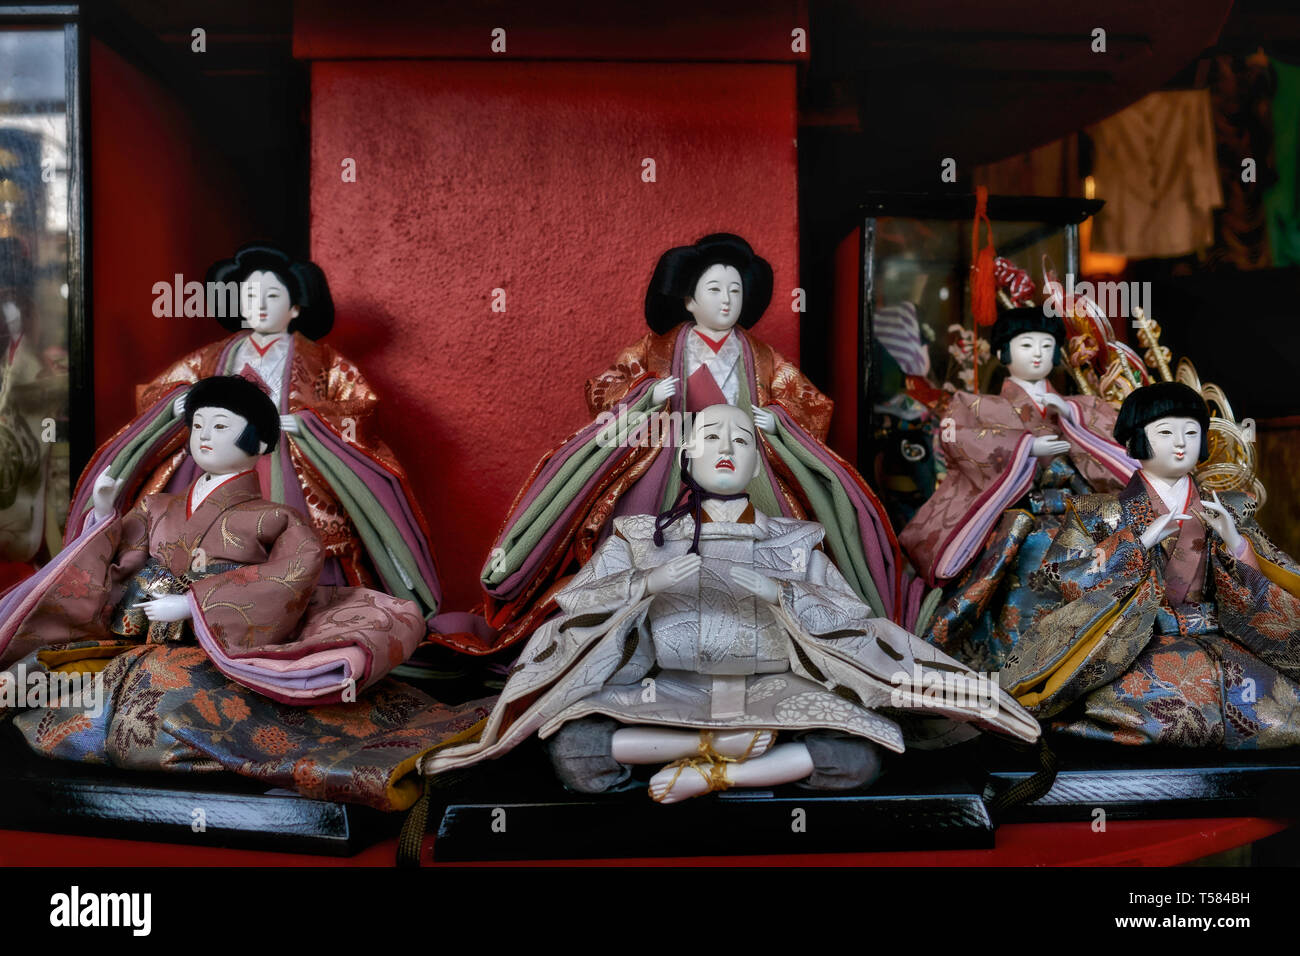 Japanese doll wearing period costume. Ningyō doll Stock Photo